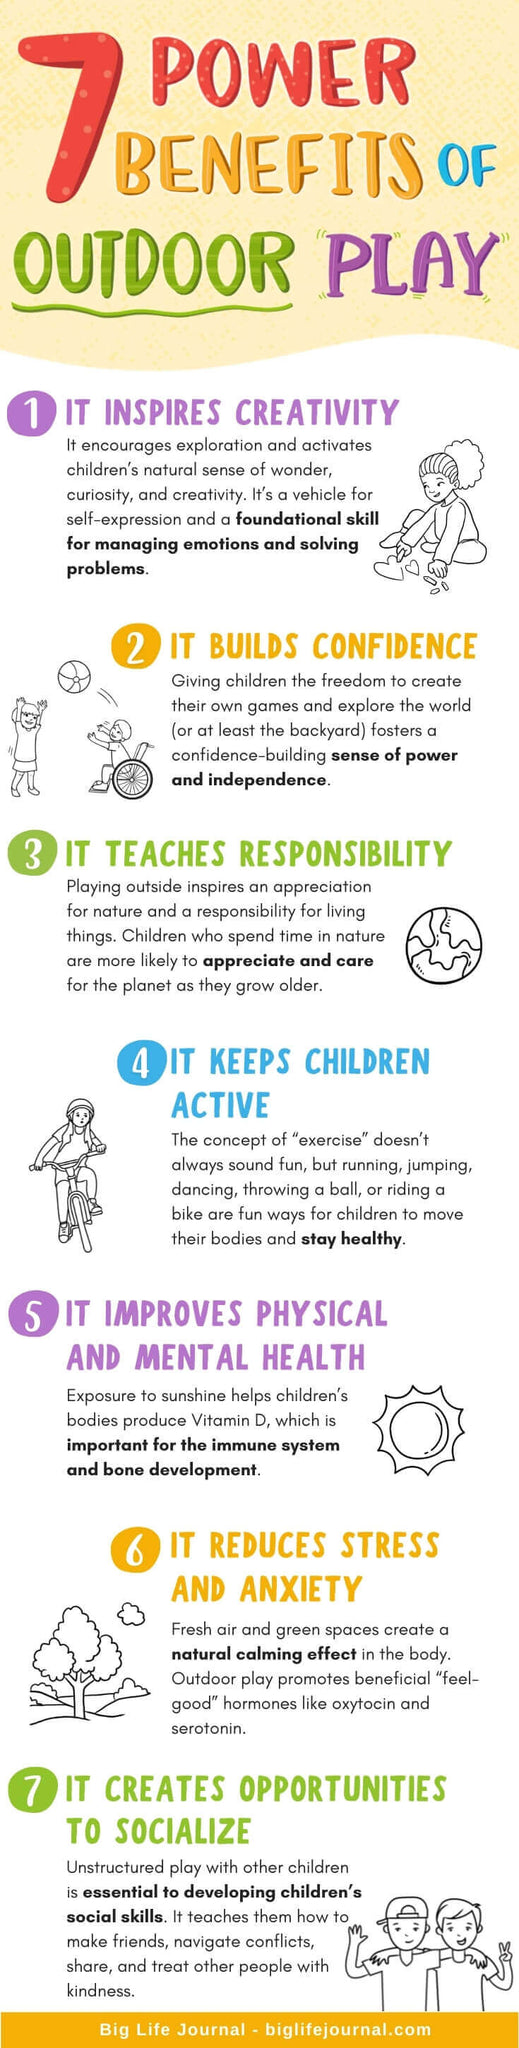 7 Benefits of Outdoor Play